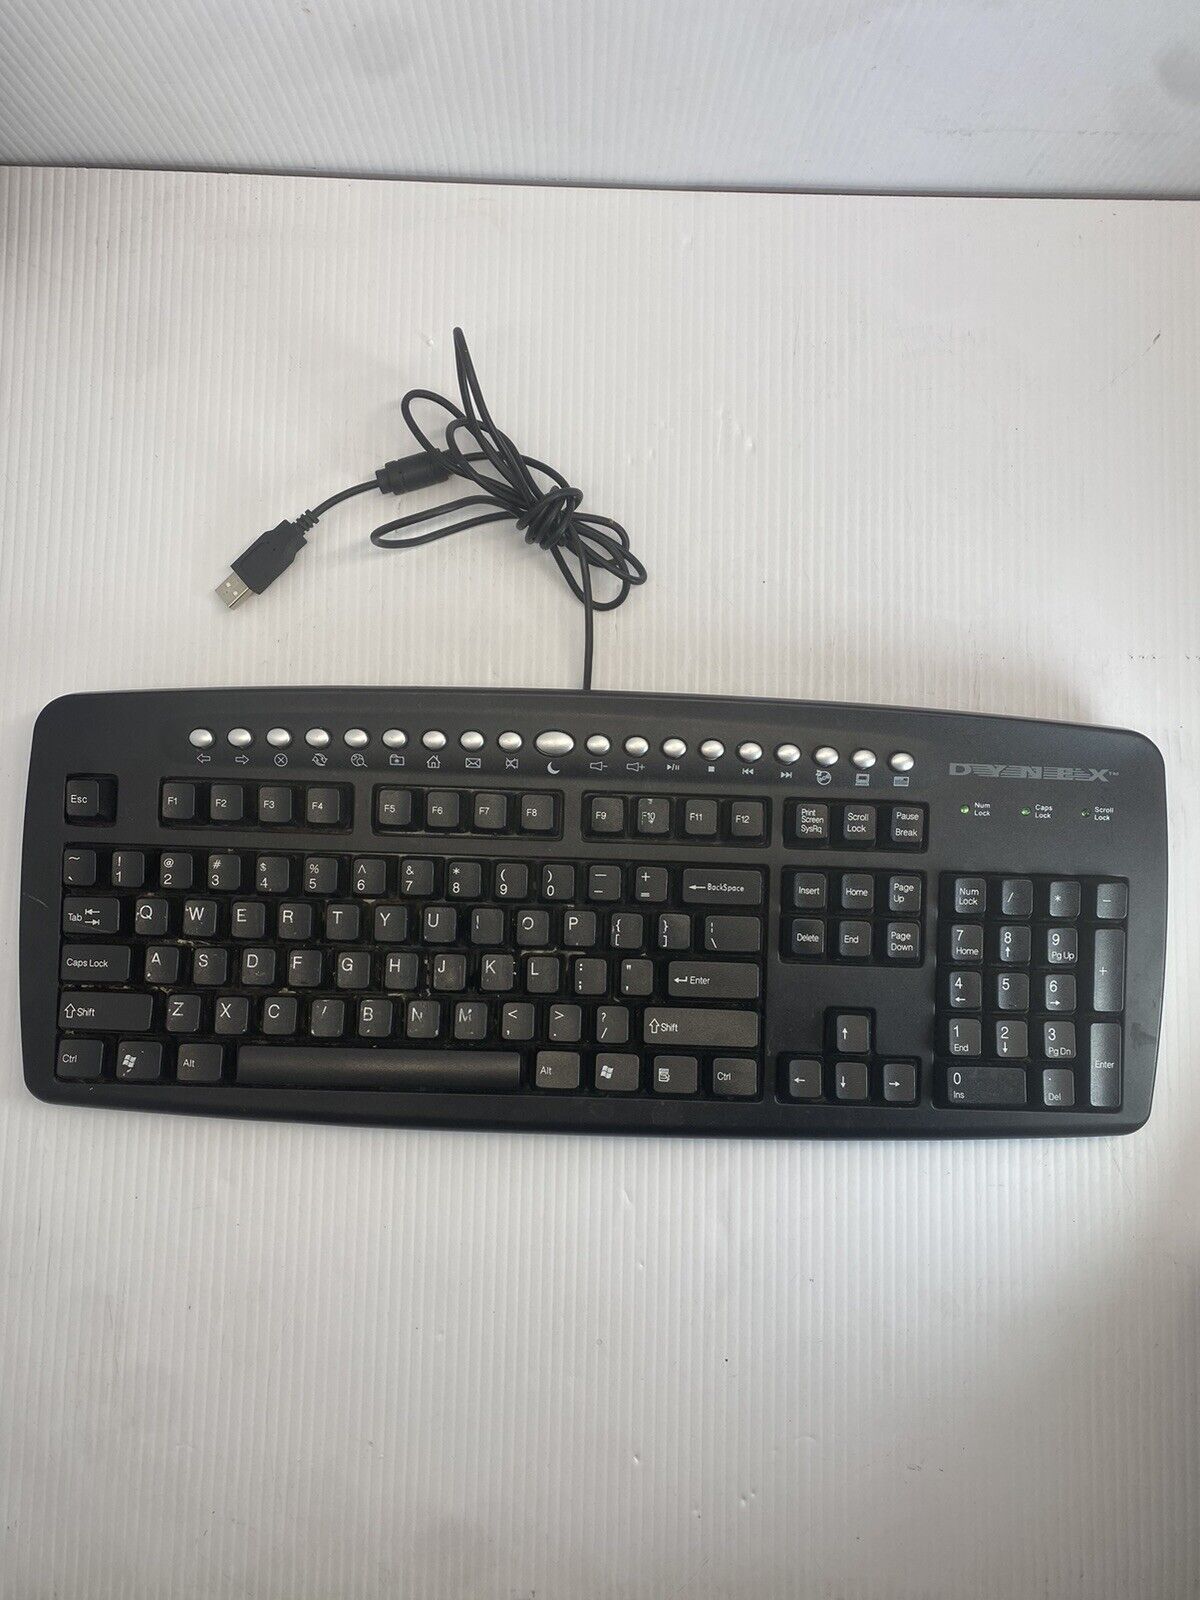 Internet Keyboard Dynex keyboard dx-mkb101 Pre-Owned Used